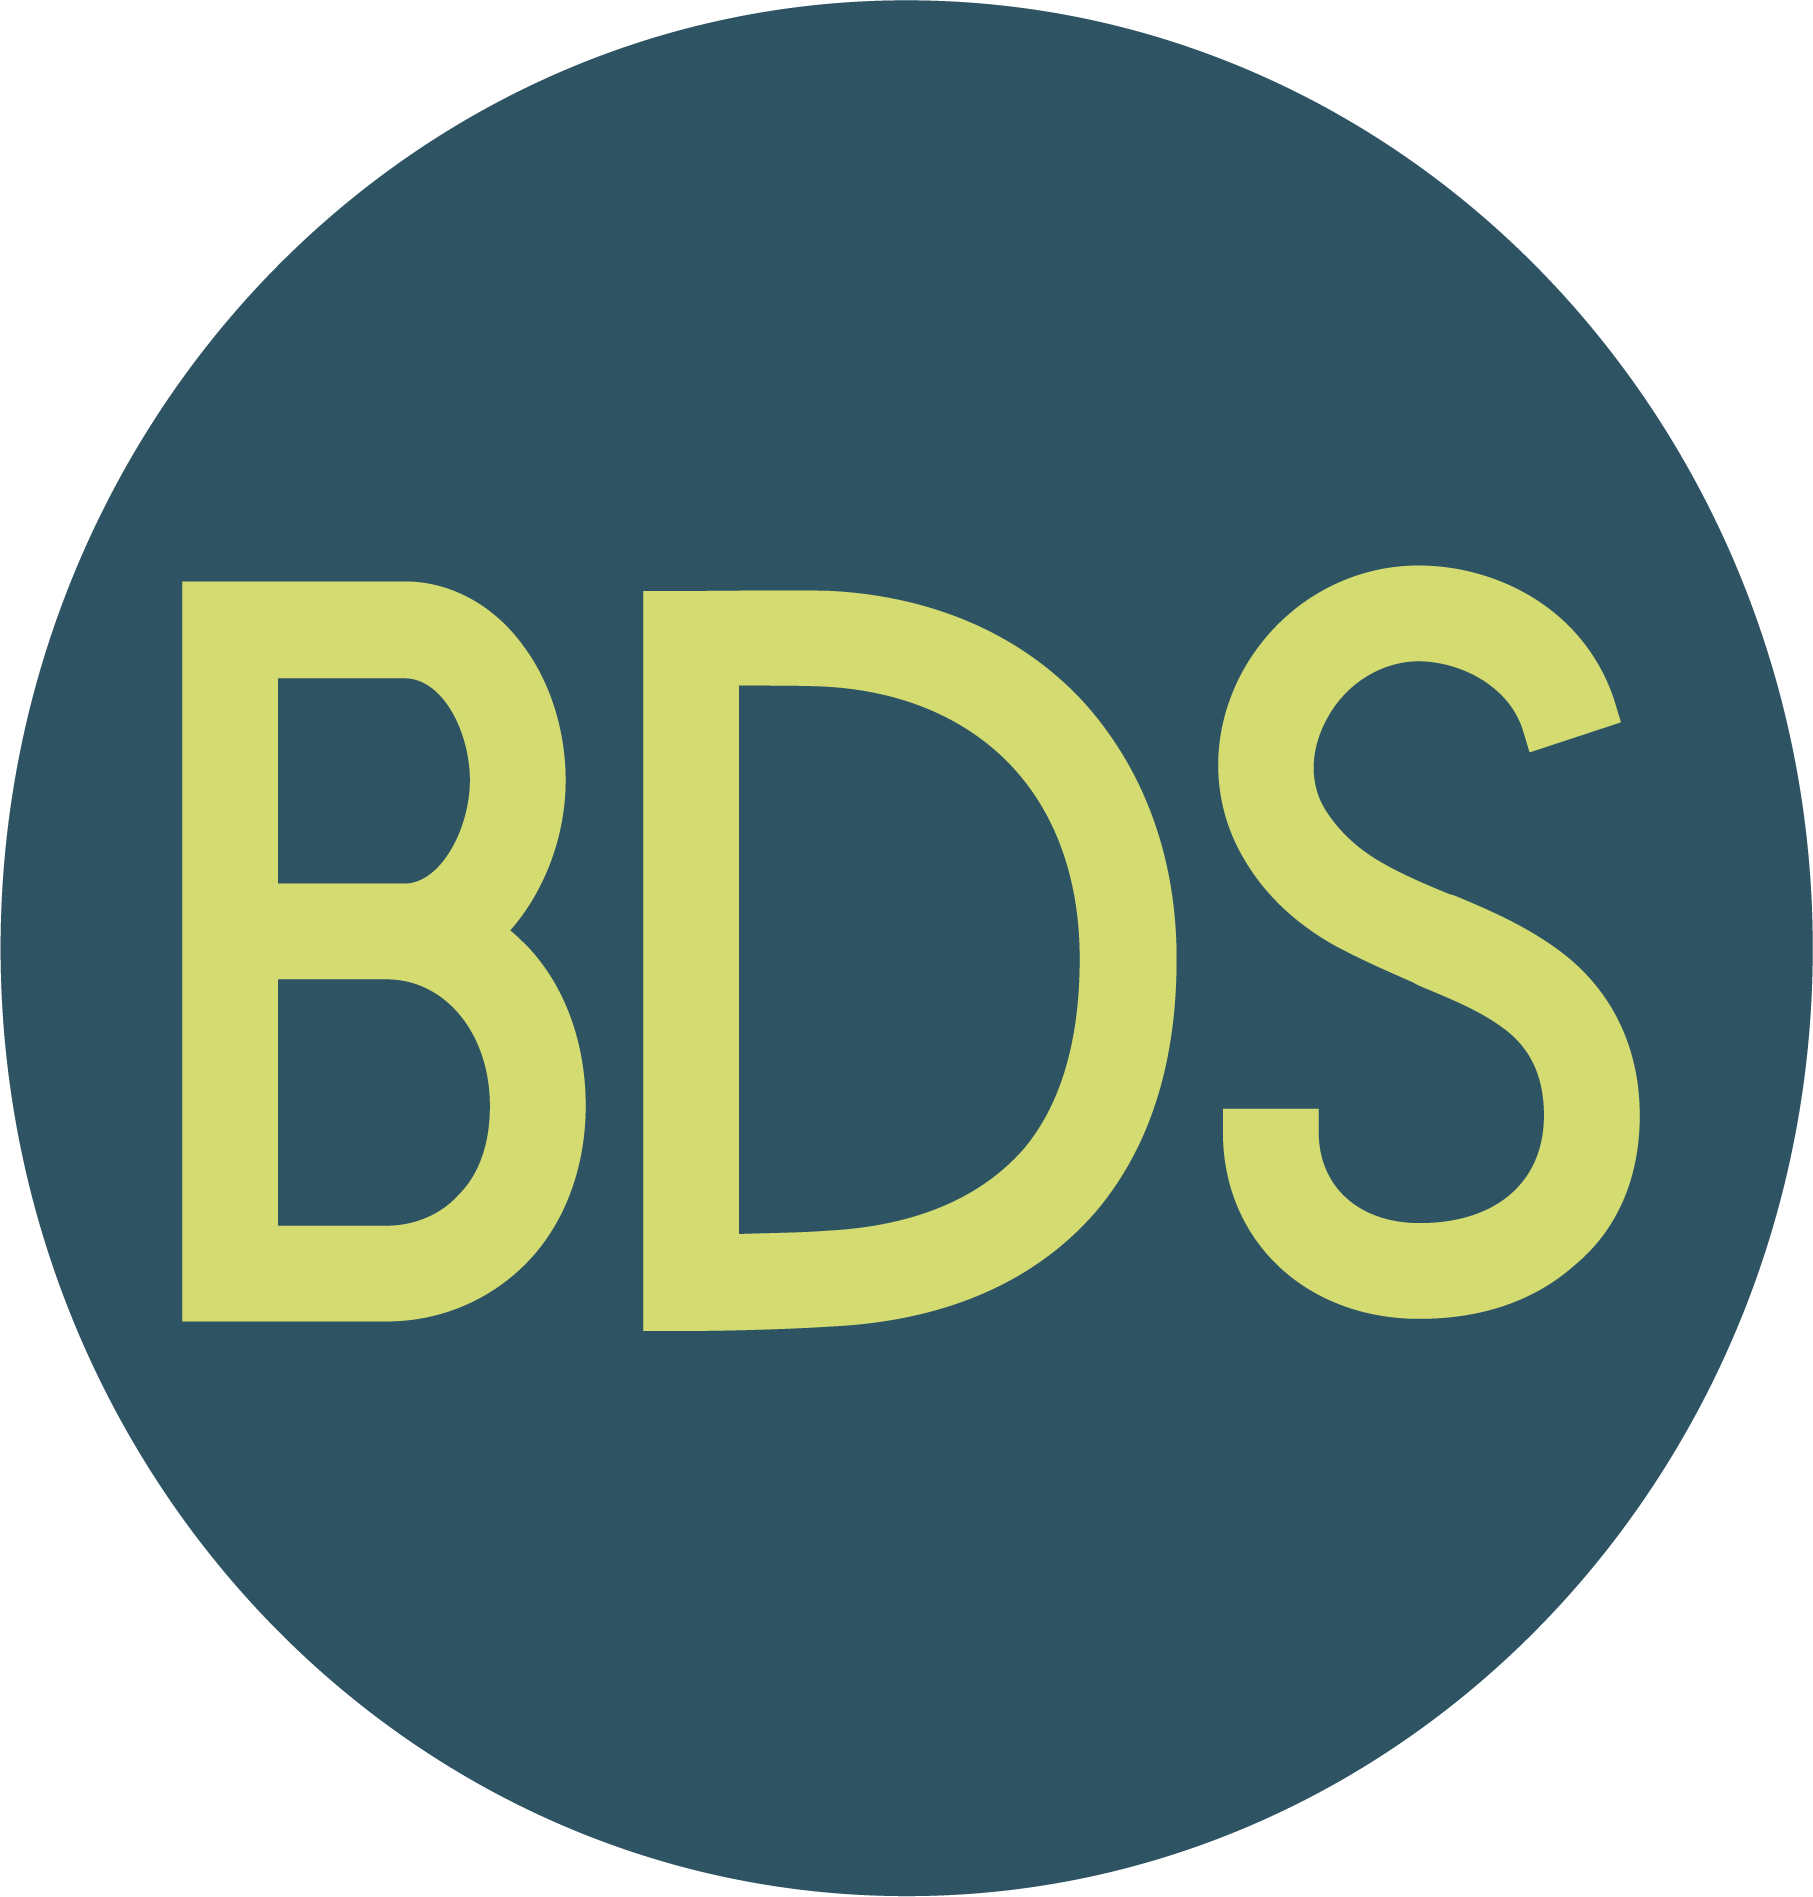 "BDS" written in light green over a dark teal circle.